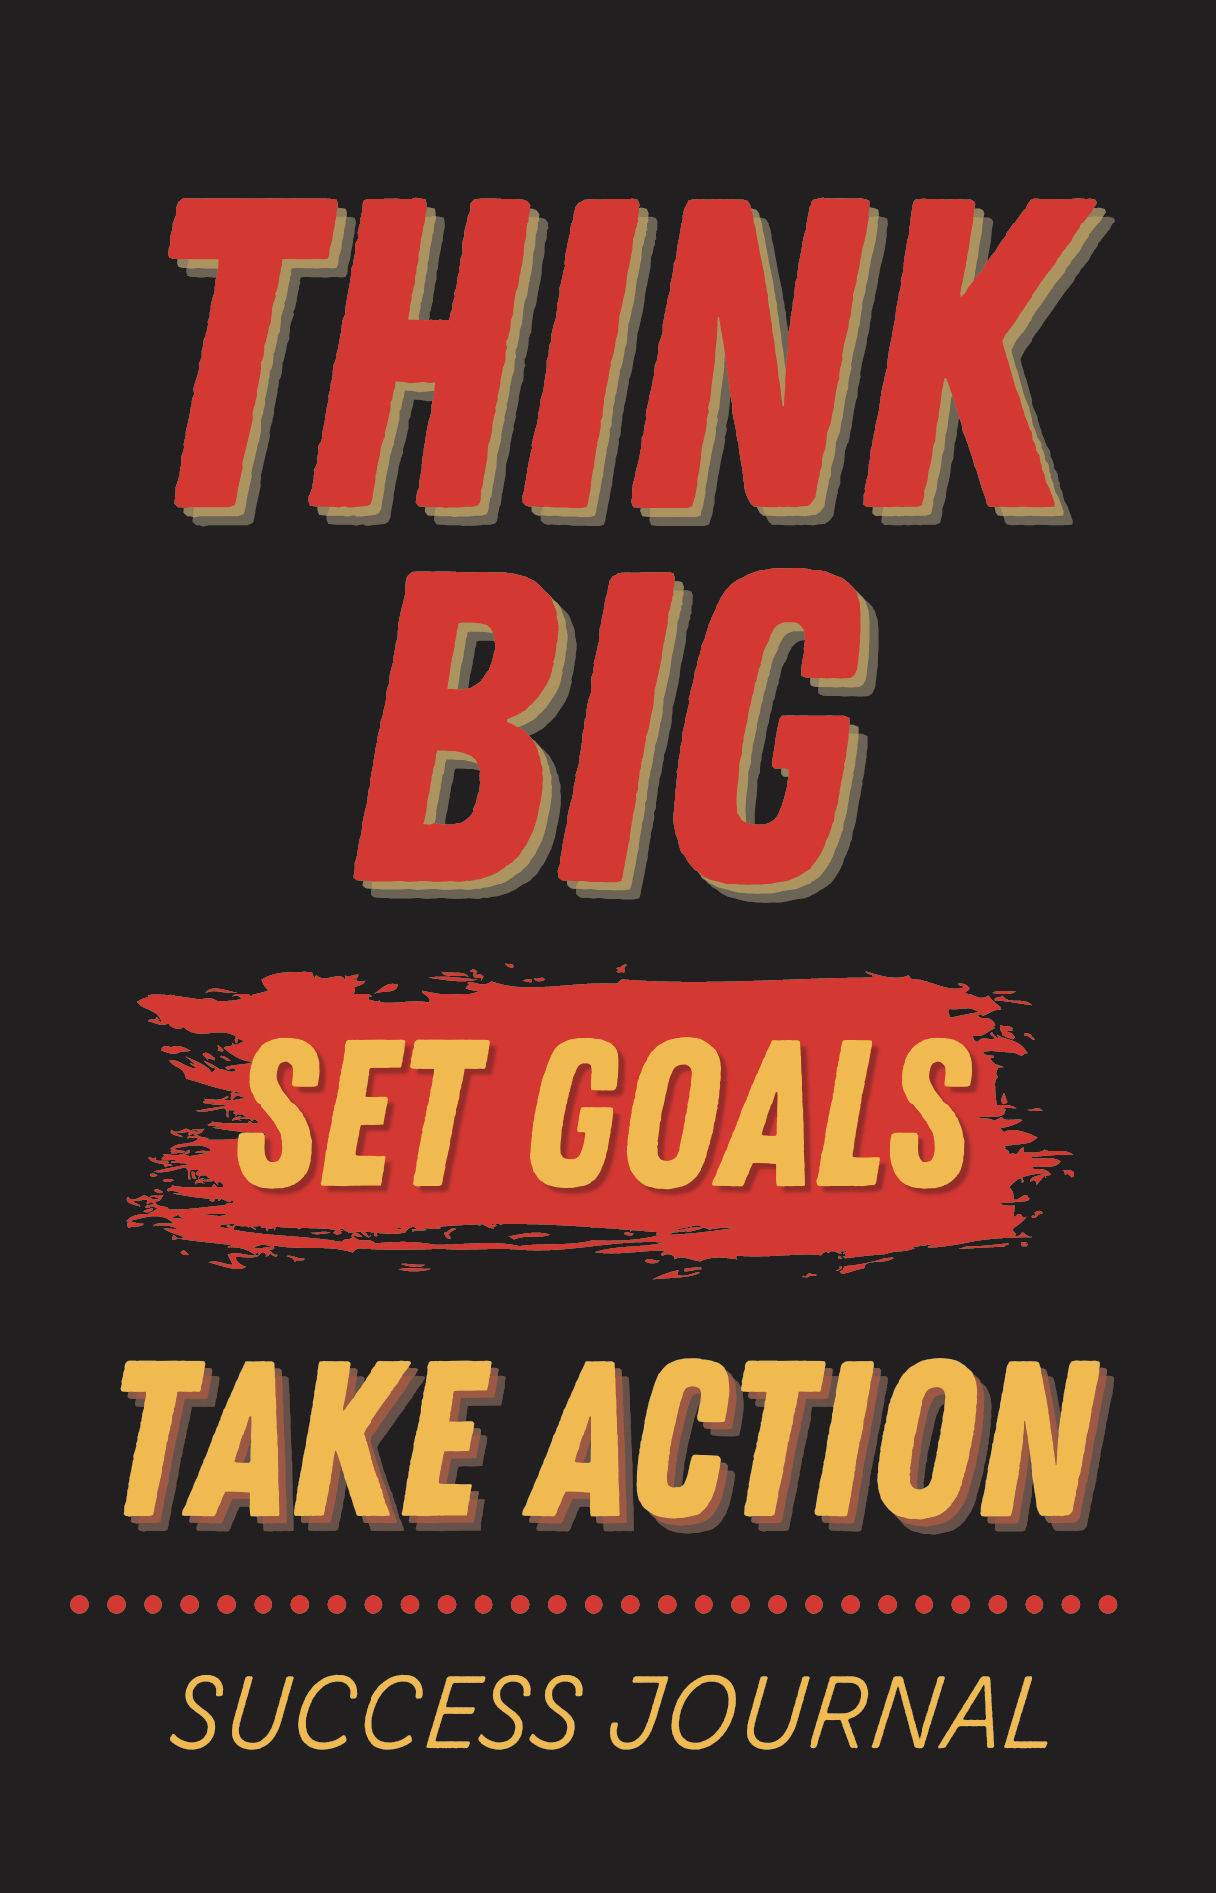 Think Big Set Goals Take Action